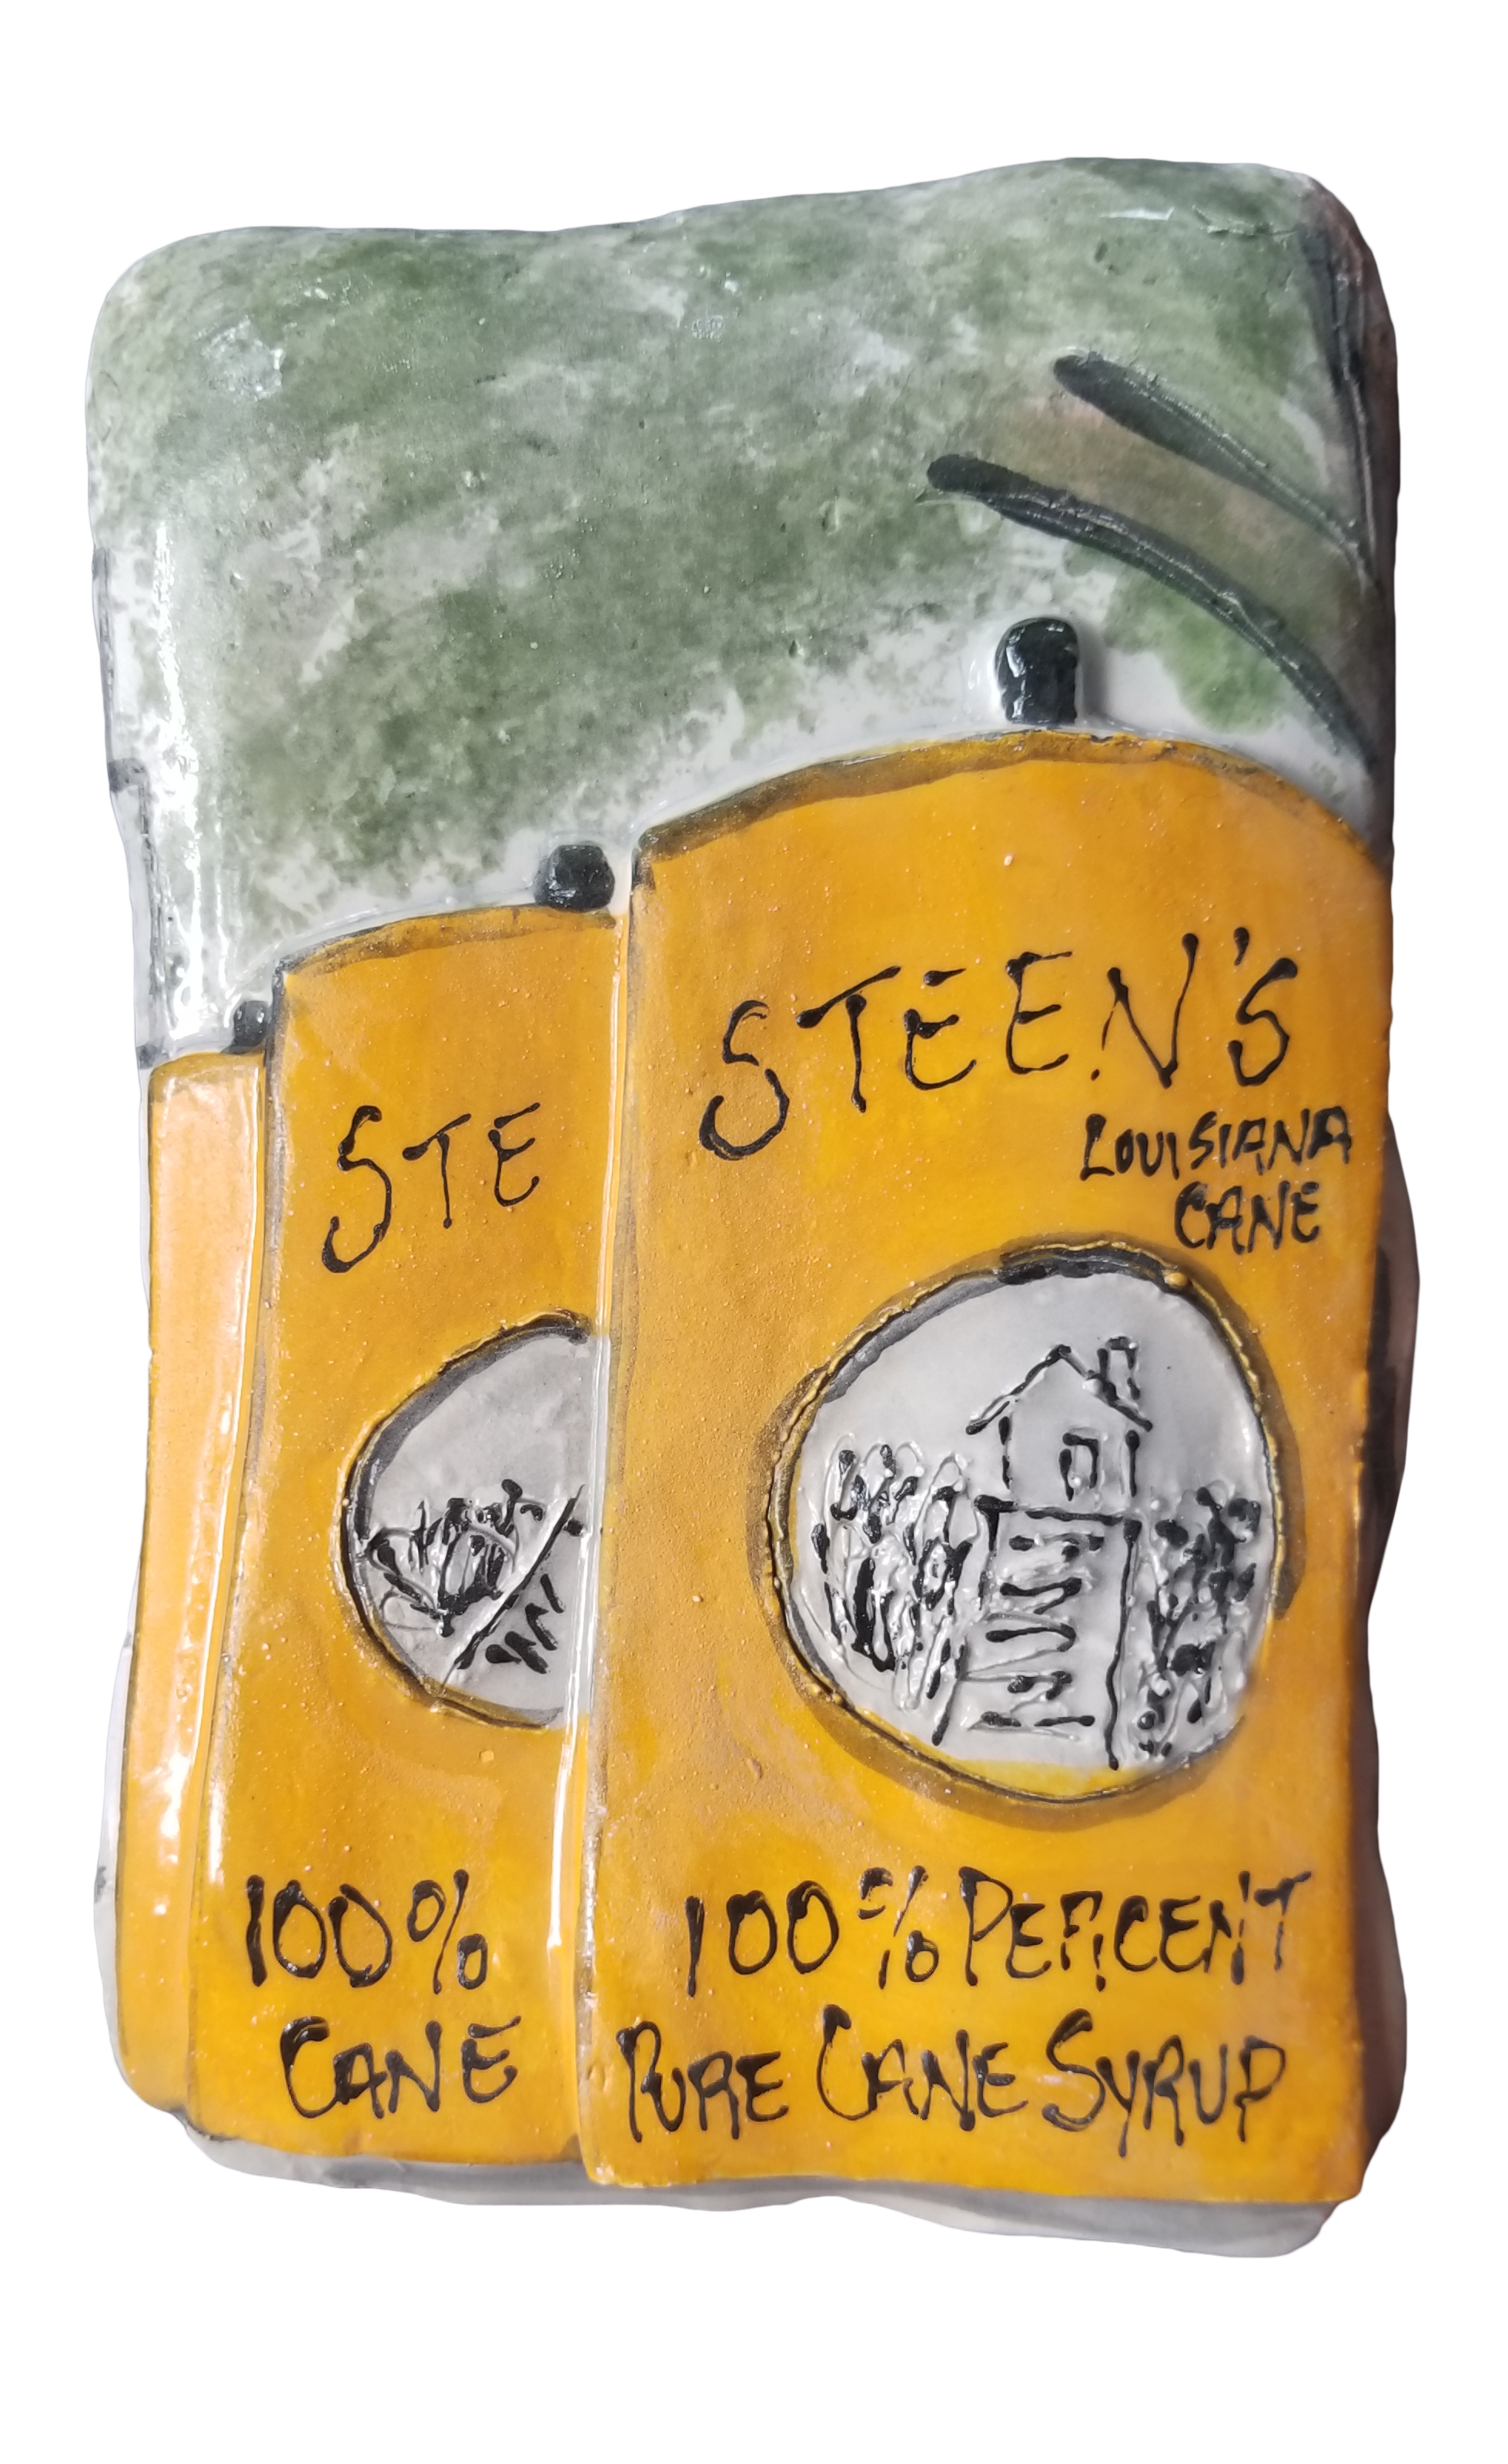 Steen’s Louisiana Cane Syrup